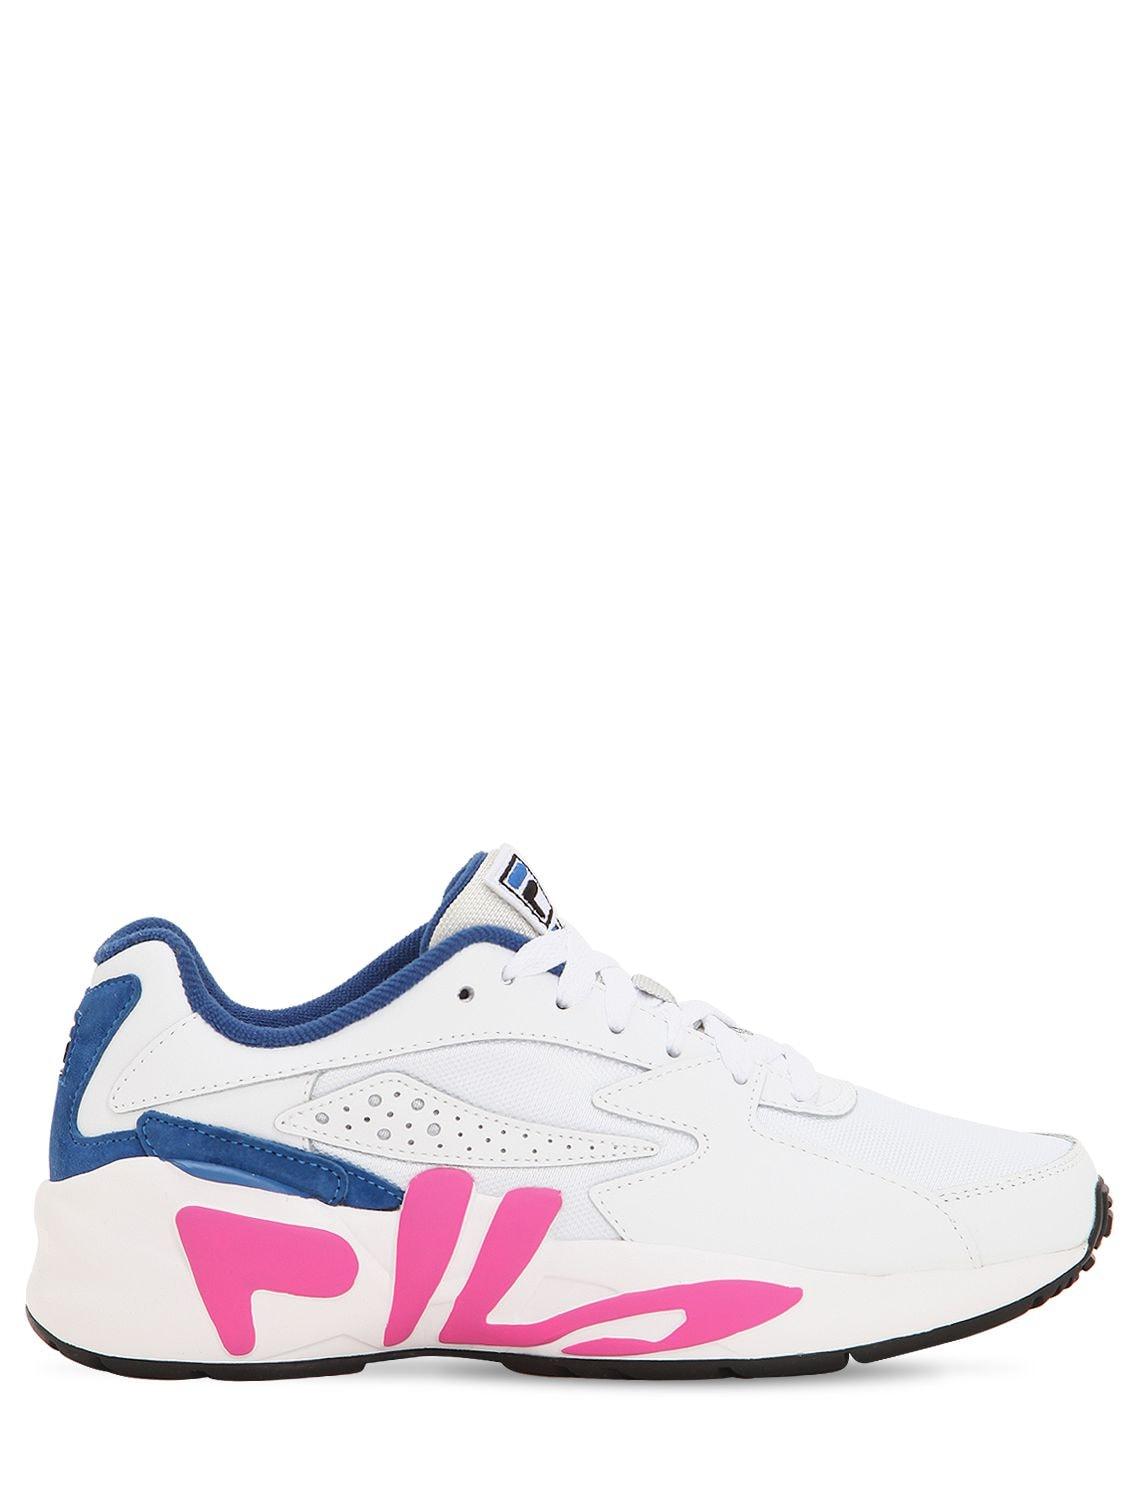 Fila Mindblower Wmm Sneakers in White/Berry (White) | Lyst